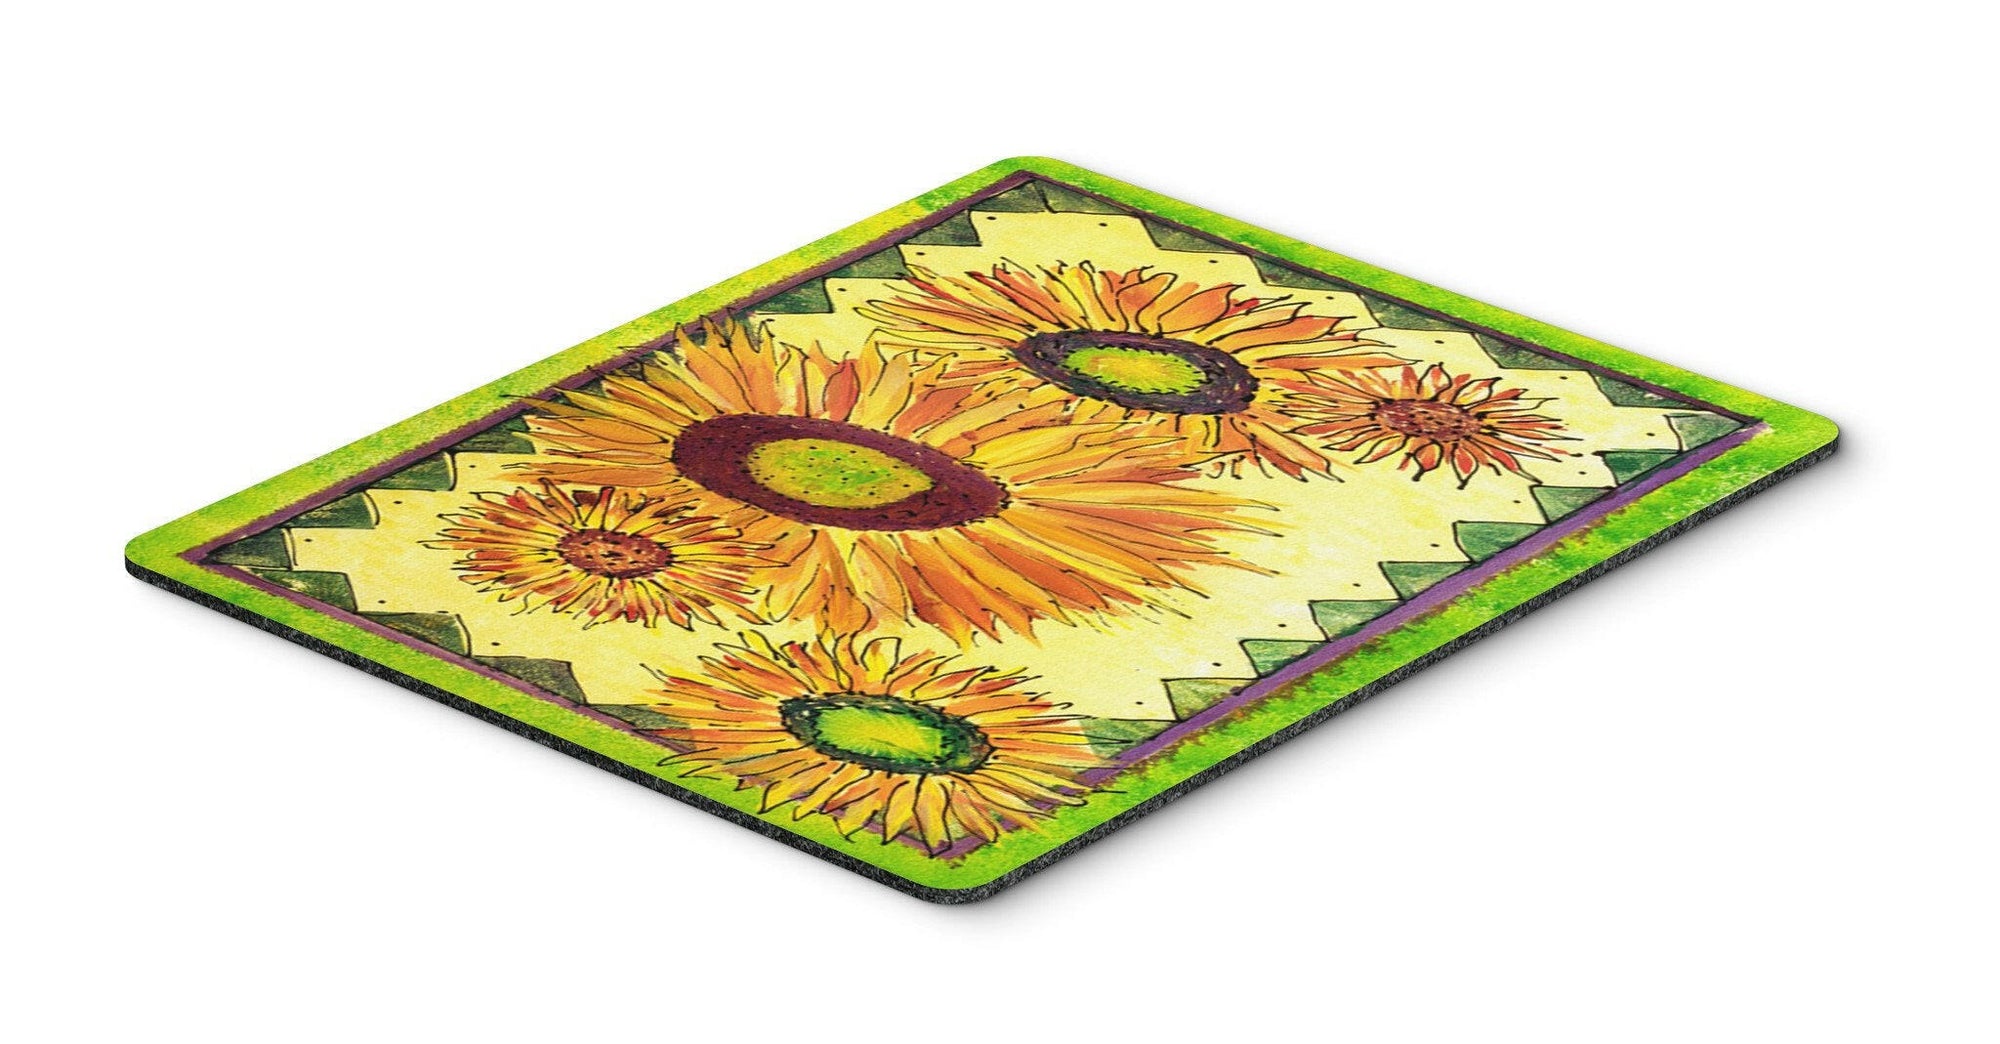 Flower - Sunflower Mouse pad, hot pad, or trivet by Caroline's Treasures